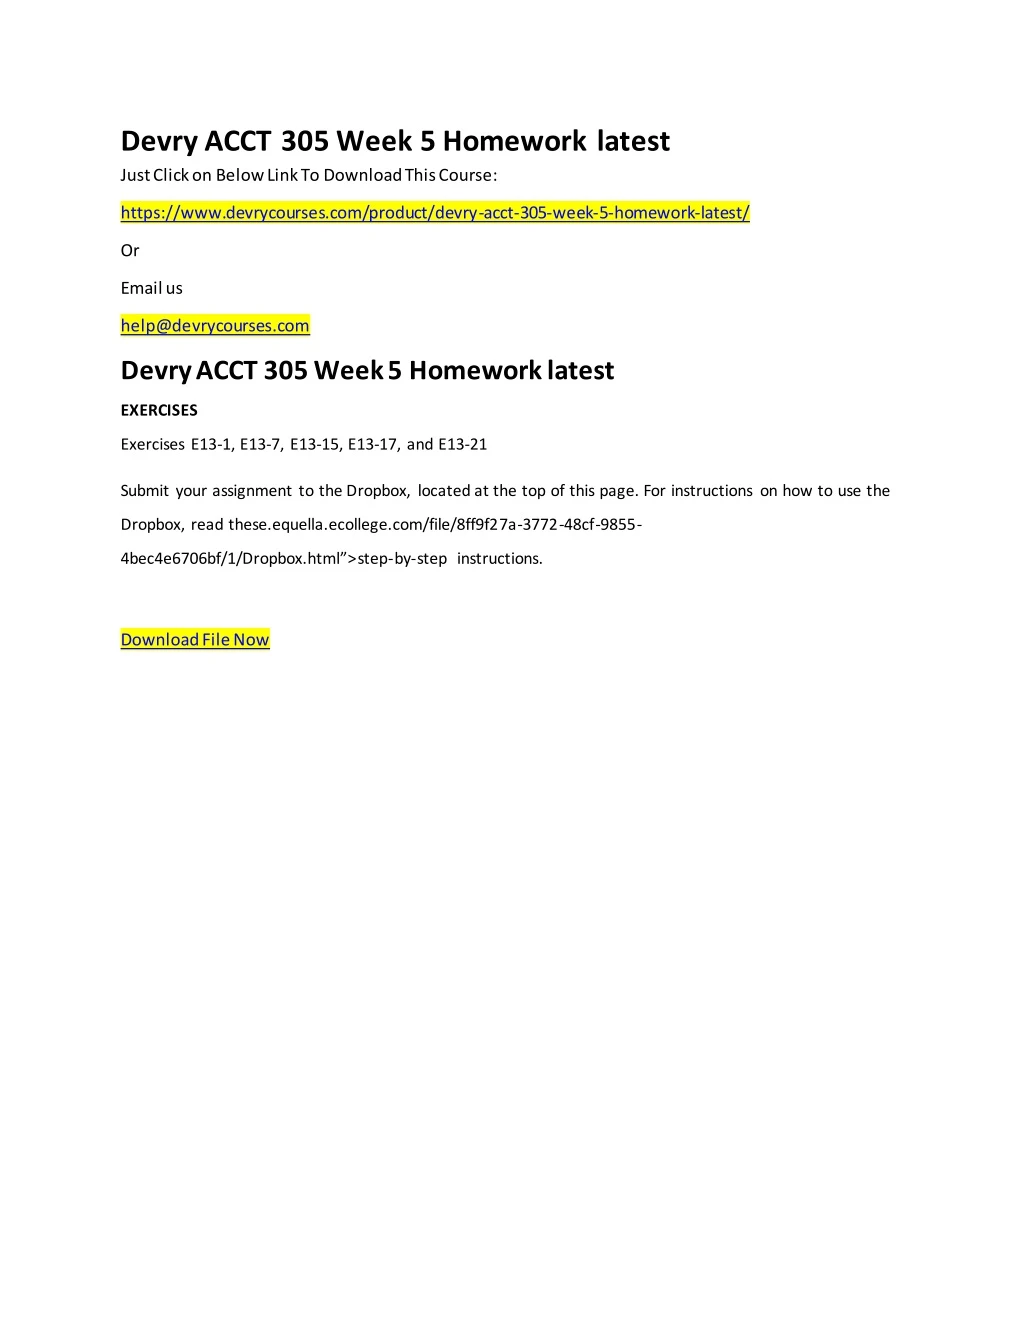 devry acct 305 week 5 homework latest just click